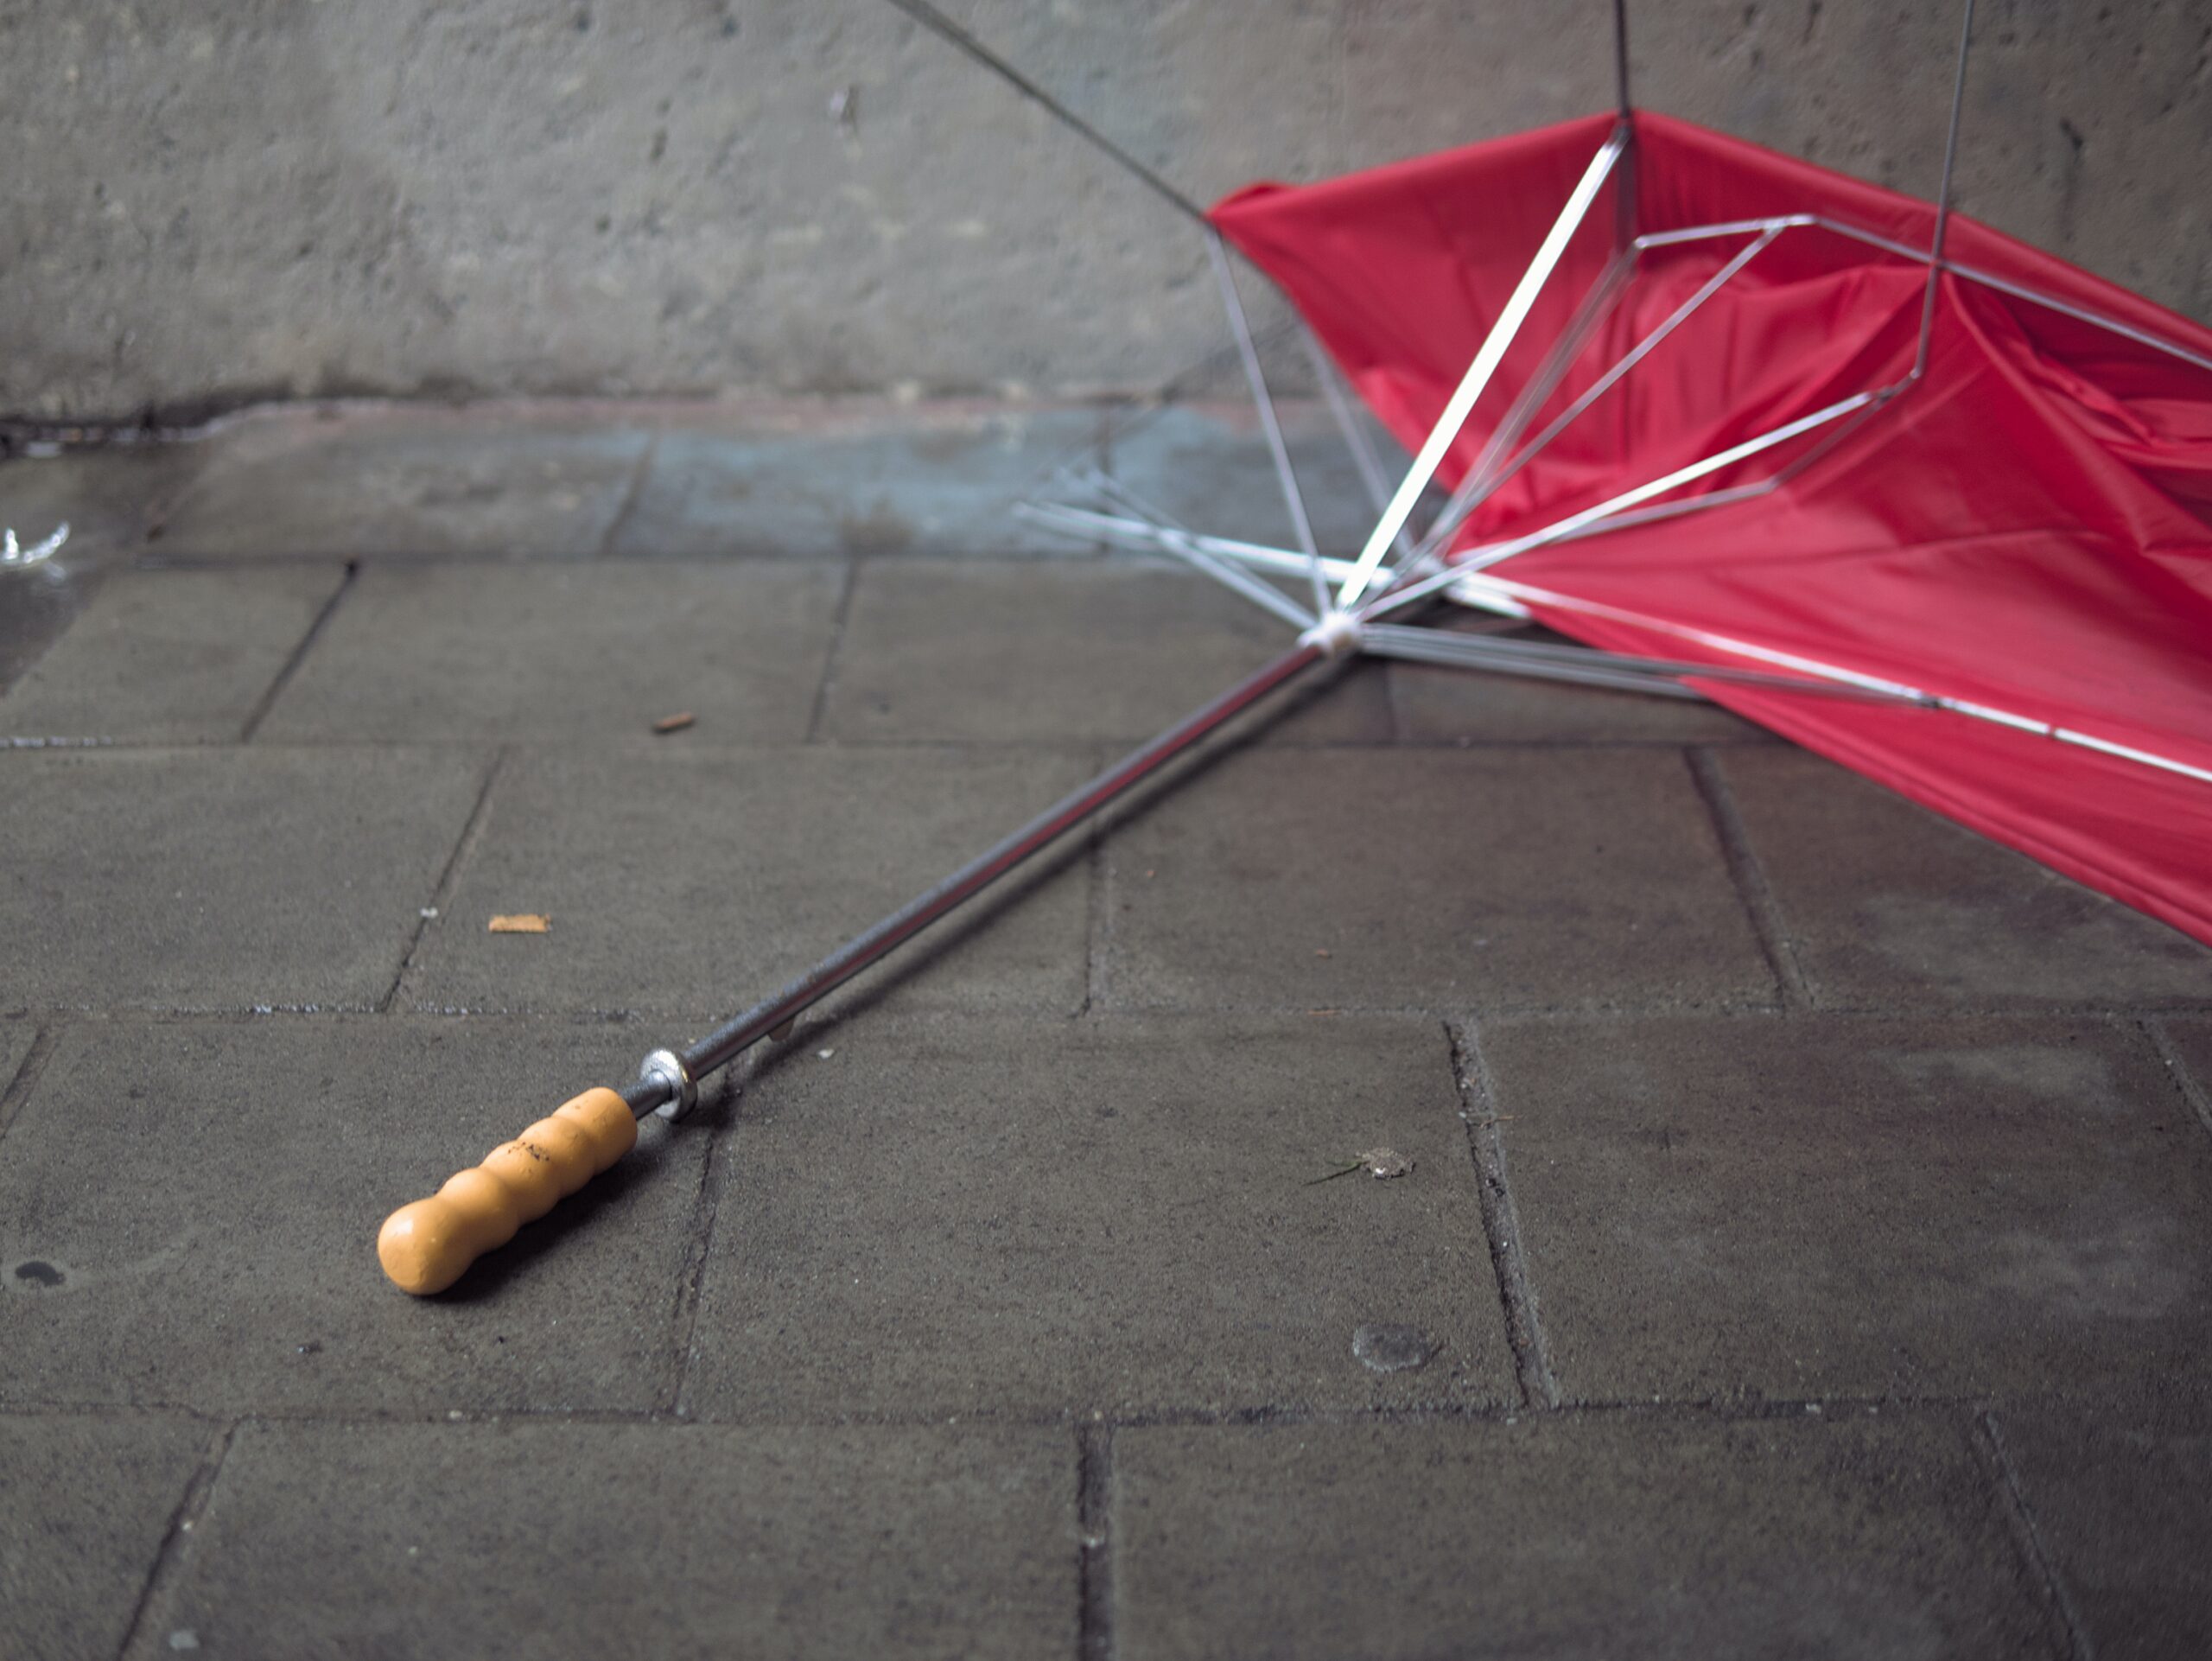 broken umbrella lying on the pavement.